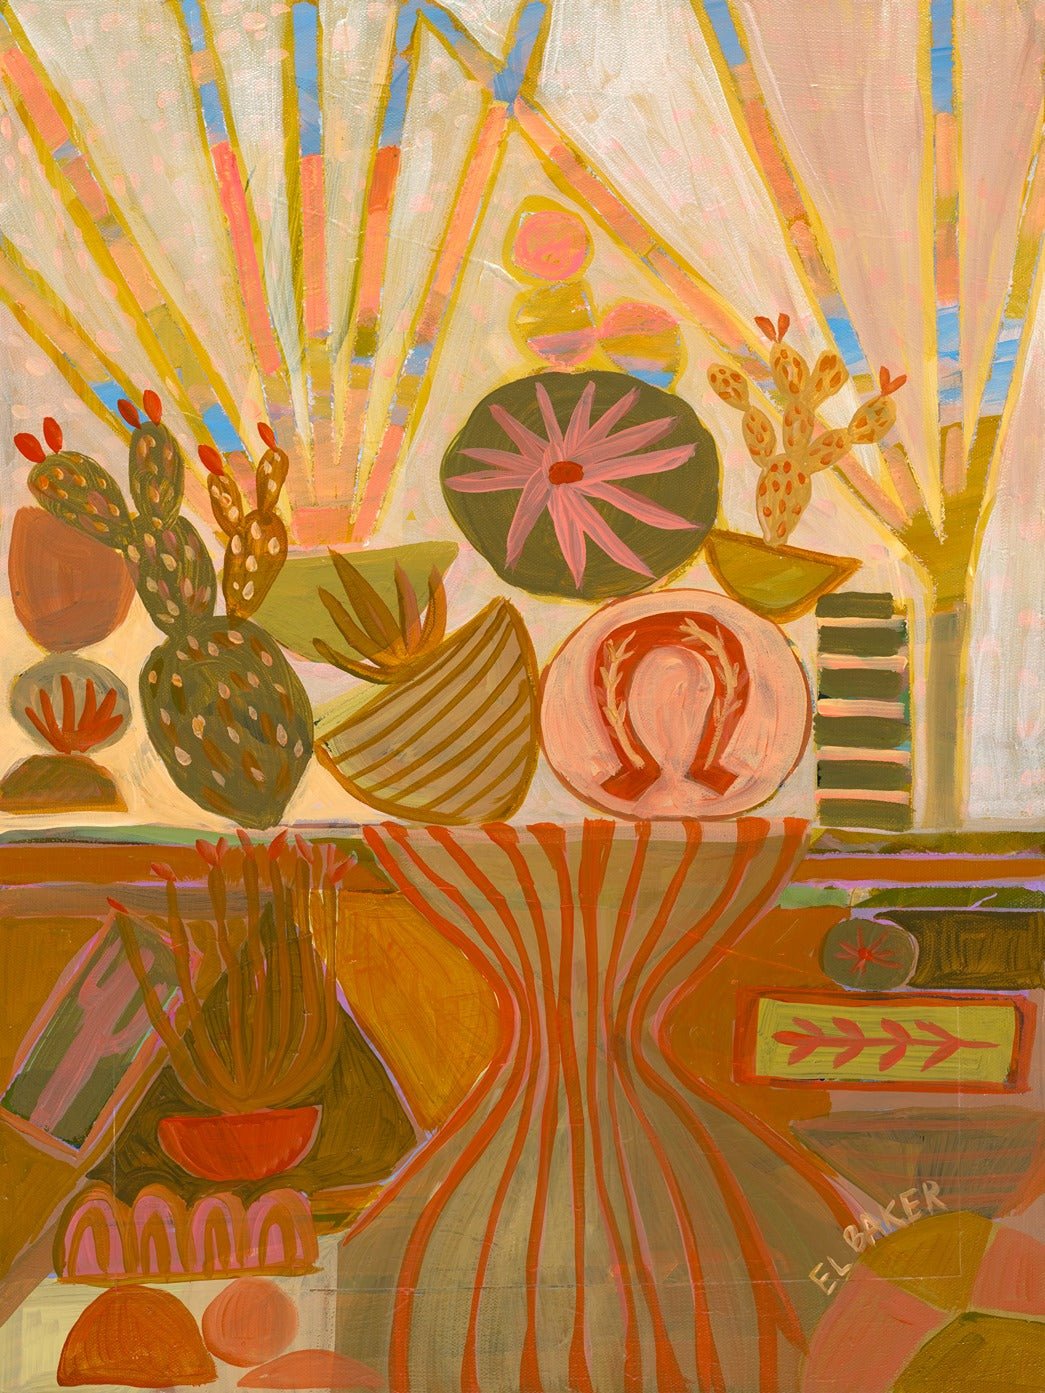 Peach Prickly Pear Cactus Still Life Print - El Baker Art